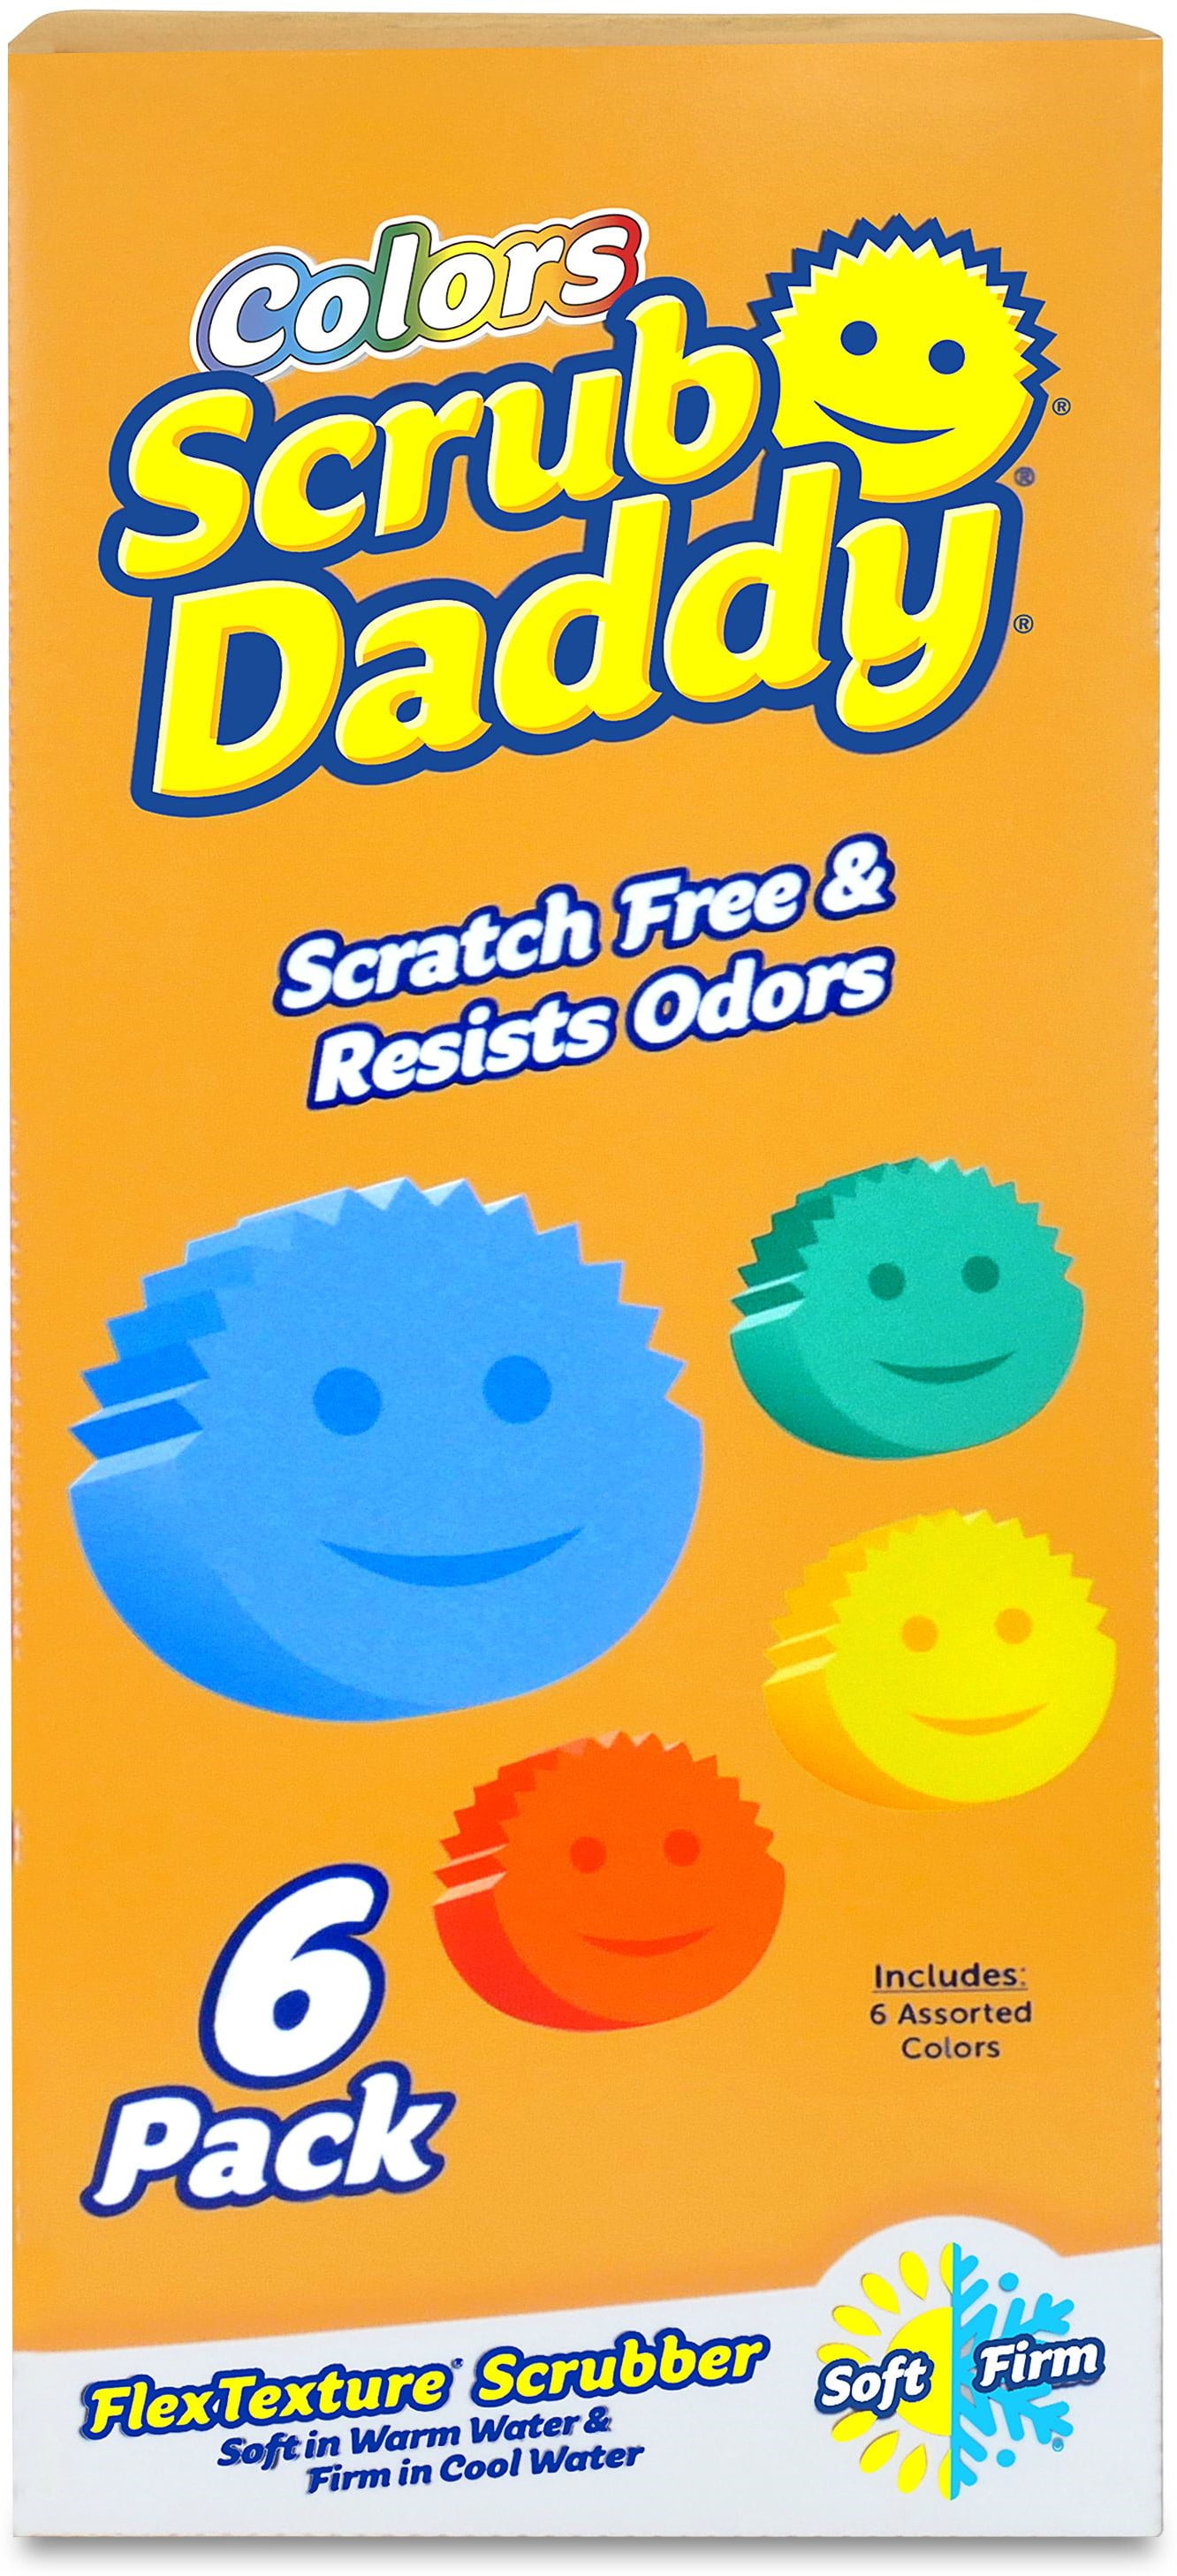 Scrub Daddy Original All Purpose Cleaning Sponge (Asstd.)